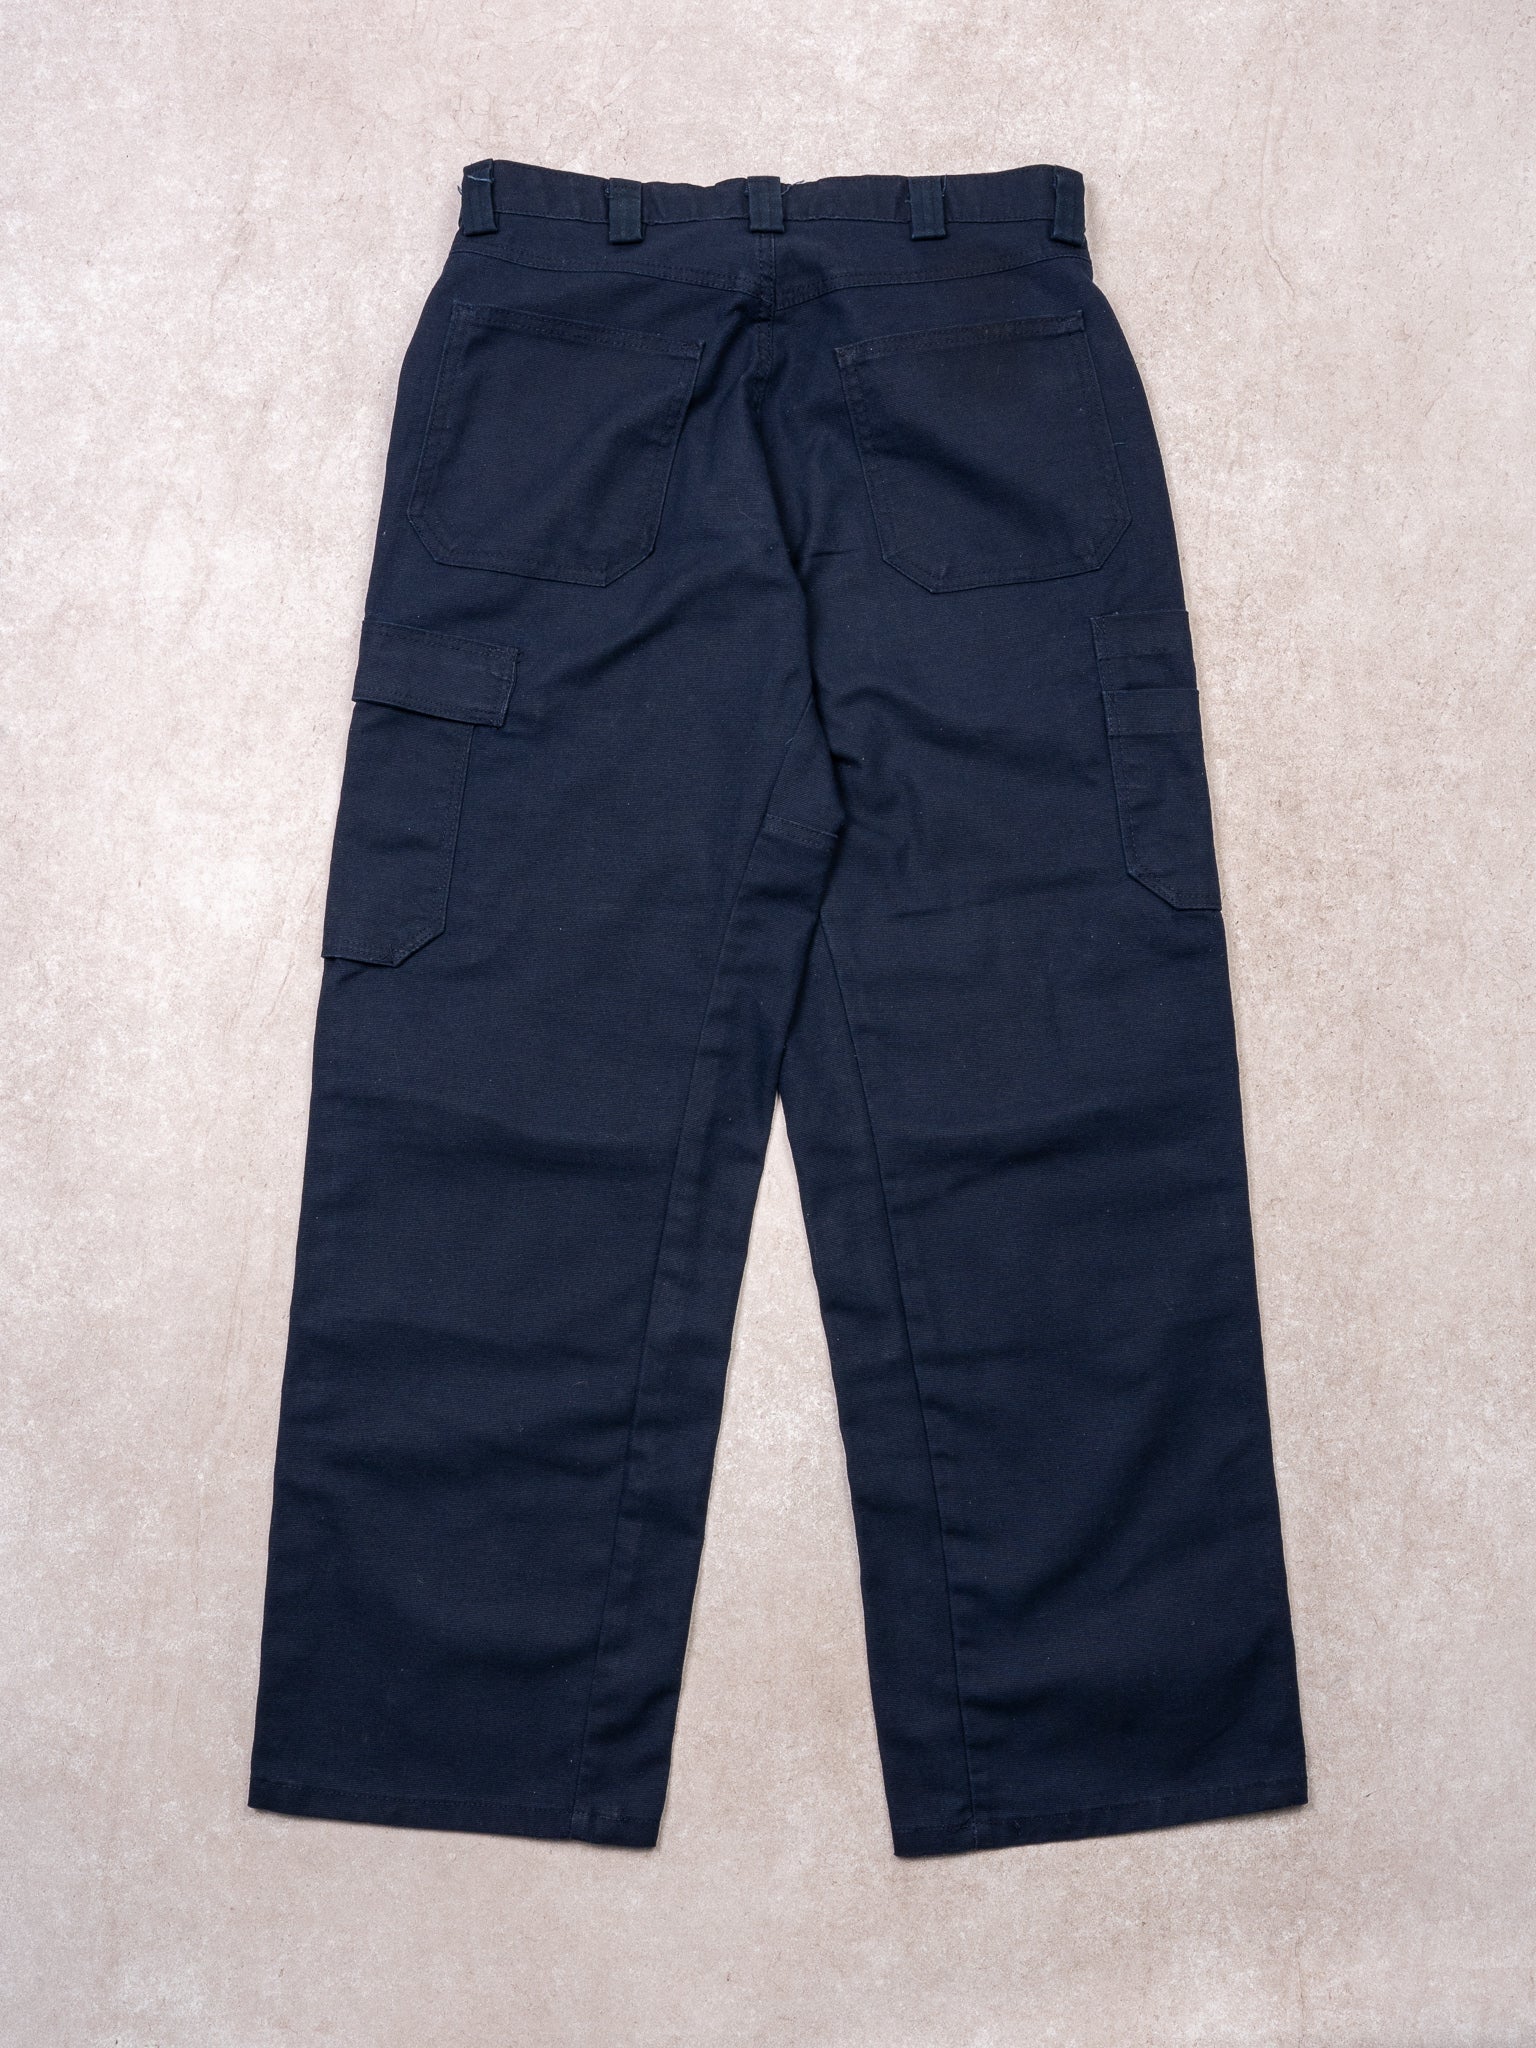 Vintage Blue Red Kap Double Knee Cargo Pants (30 x 30)